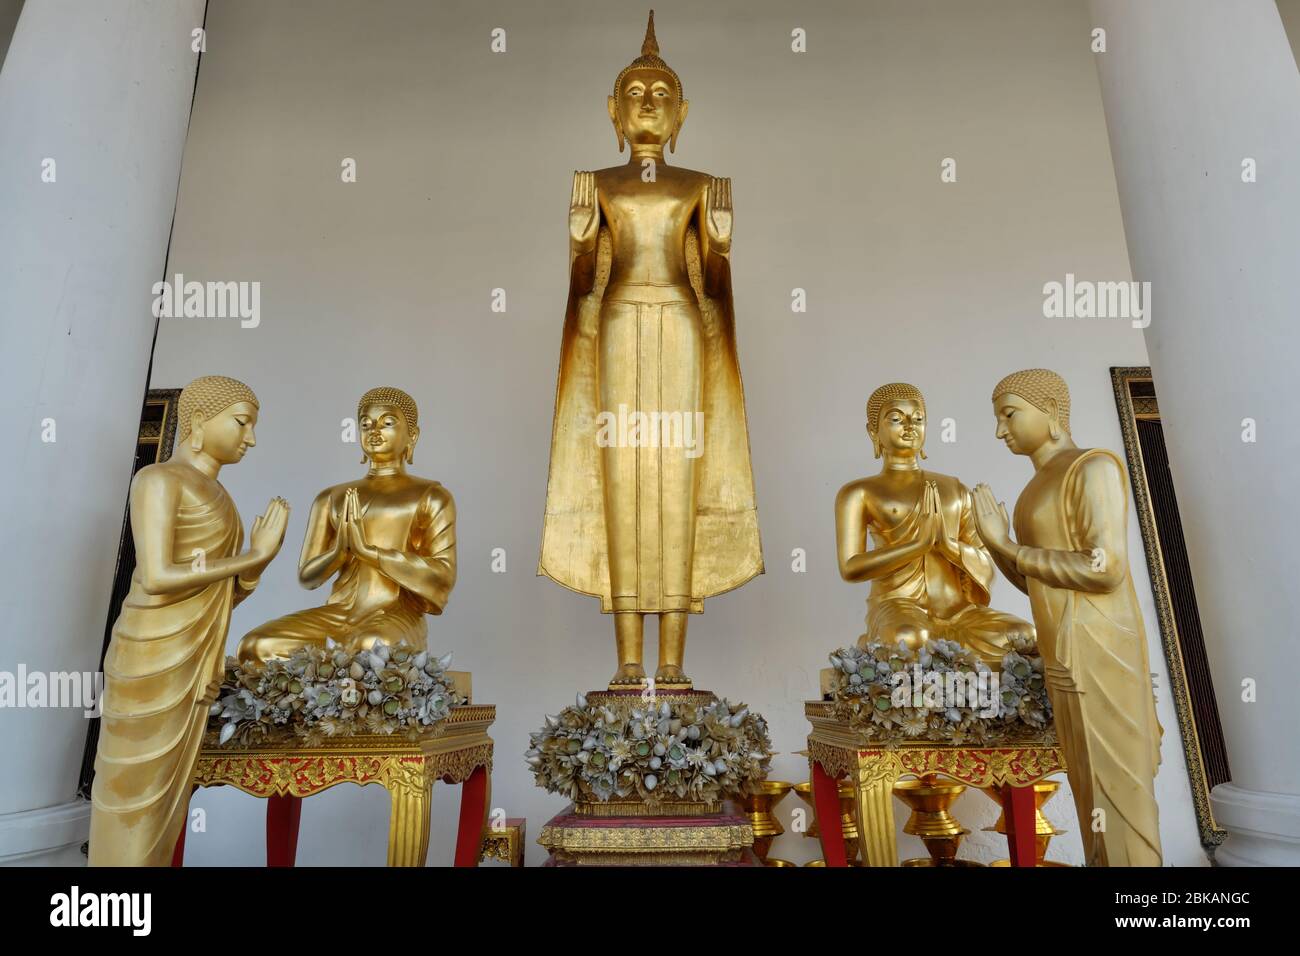 Una statua di Buddha raffigurante il Buddha nell'Abhaya Mudra, cioè un gesto di paura disperdente, fiancheggiata da figure di monaci; Wat Ratchanadta, Bangkok, Thailandia Foto Stock